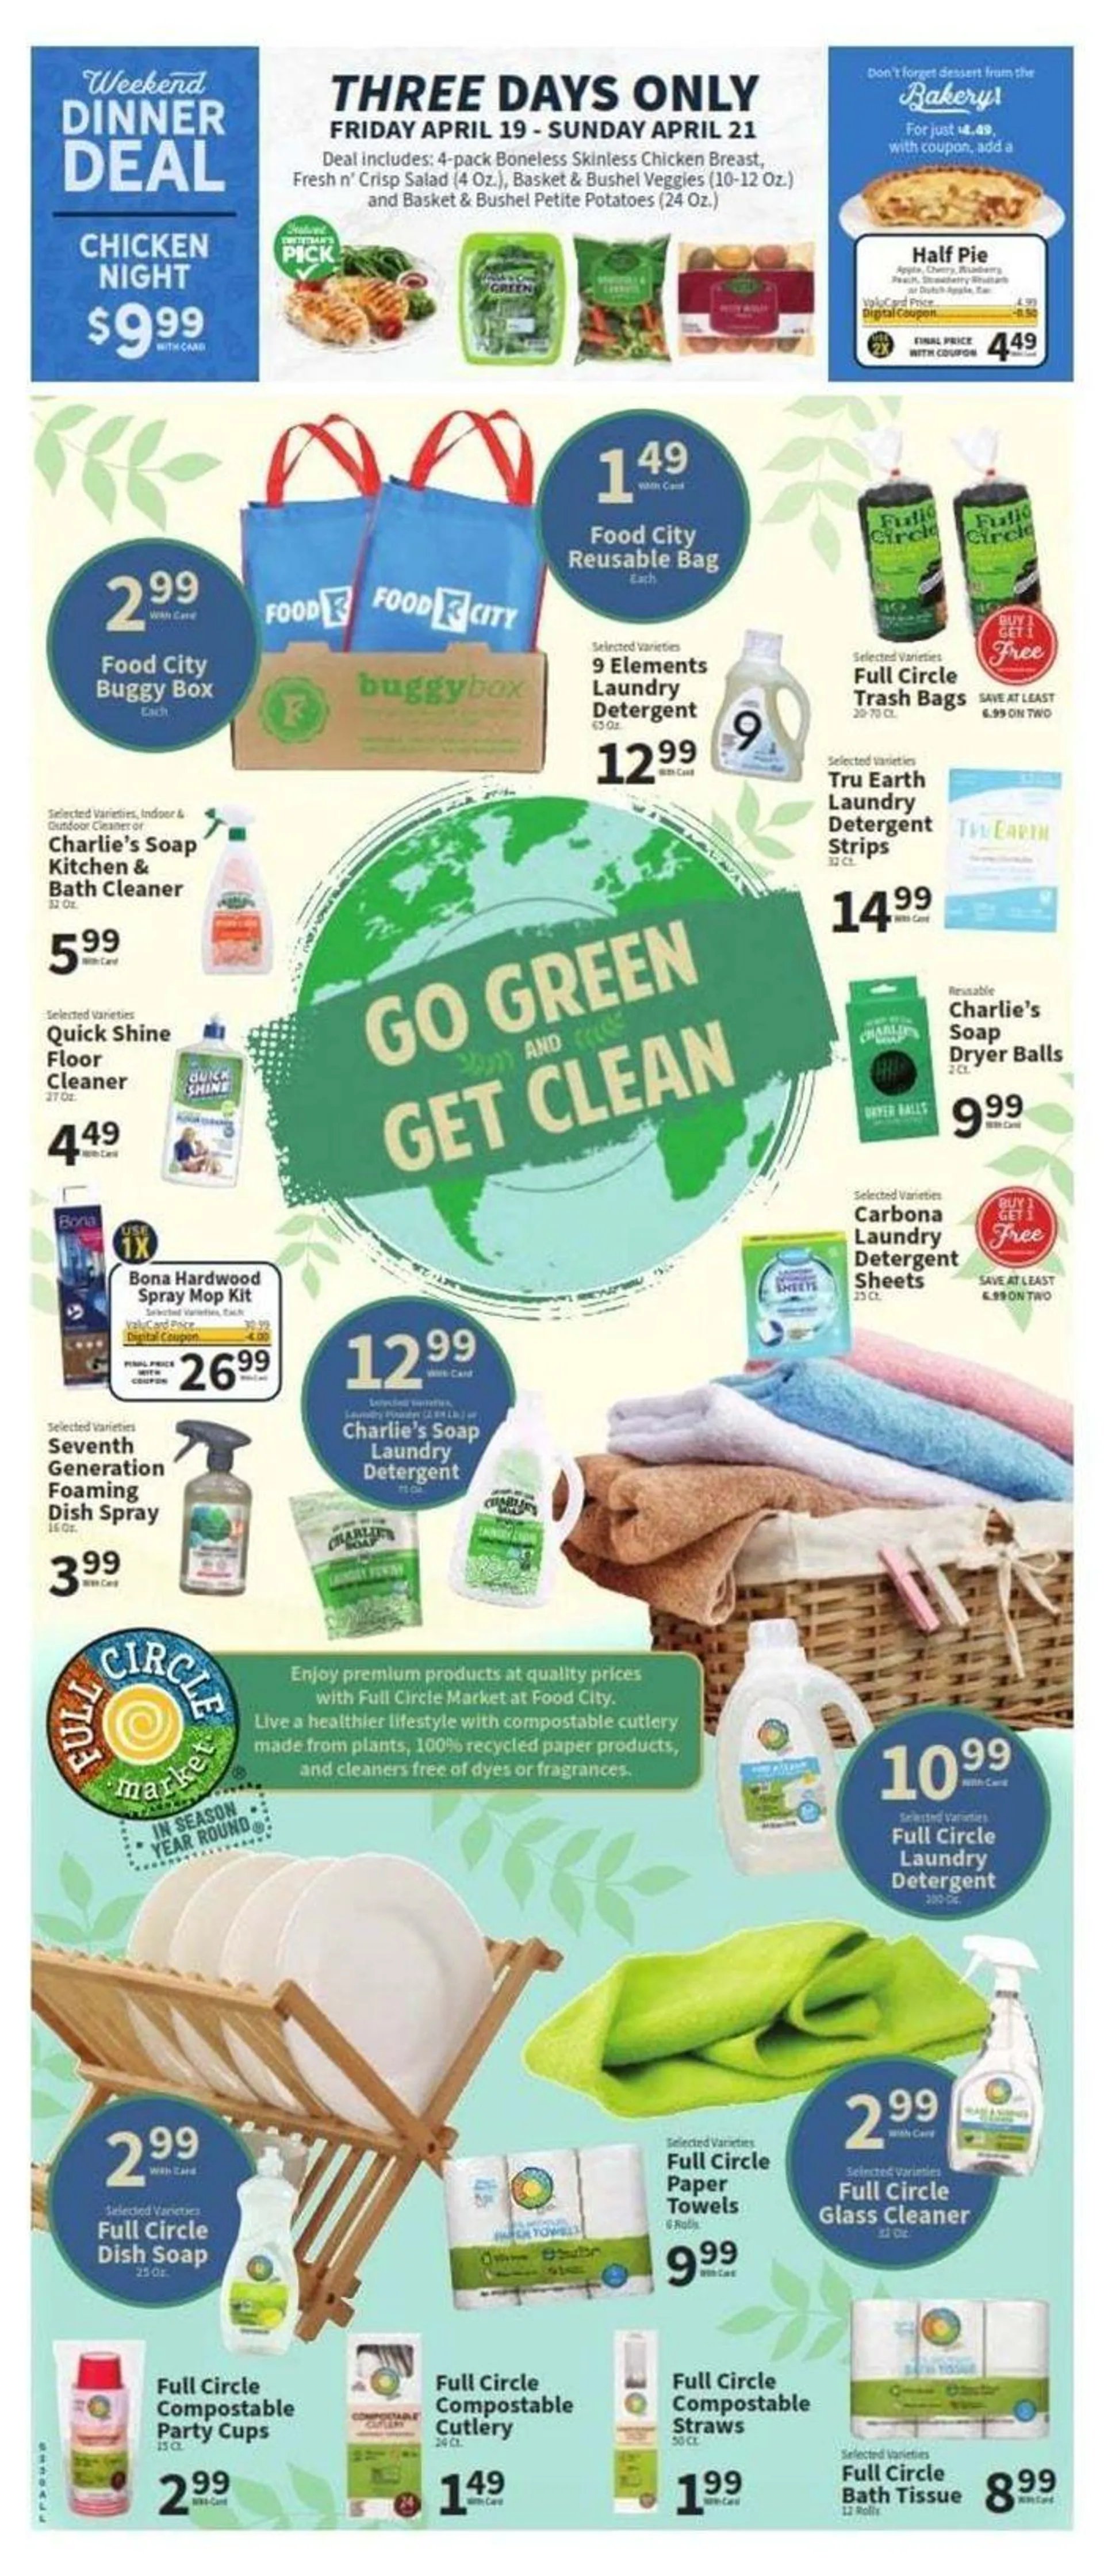 Go Green Get Clean - 2